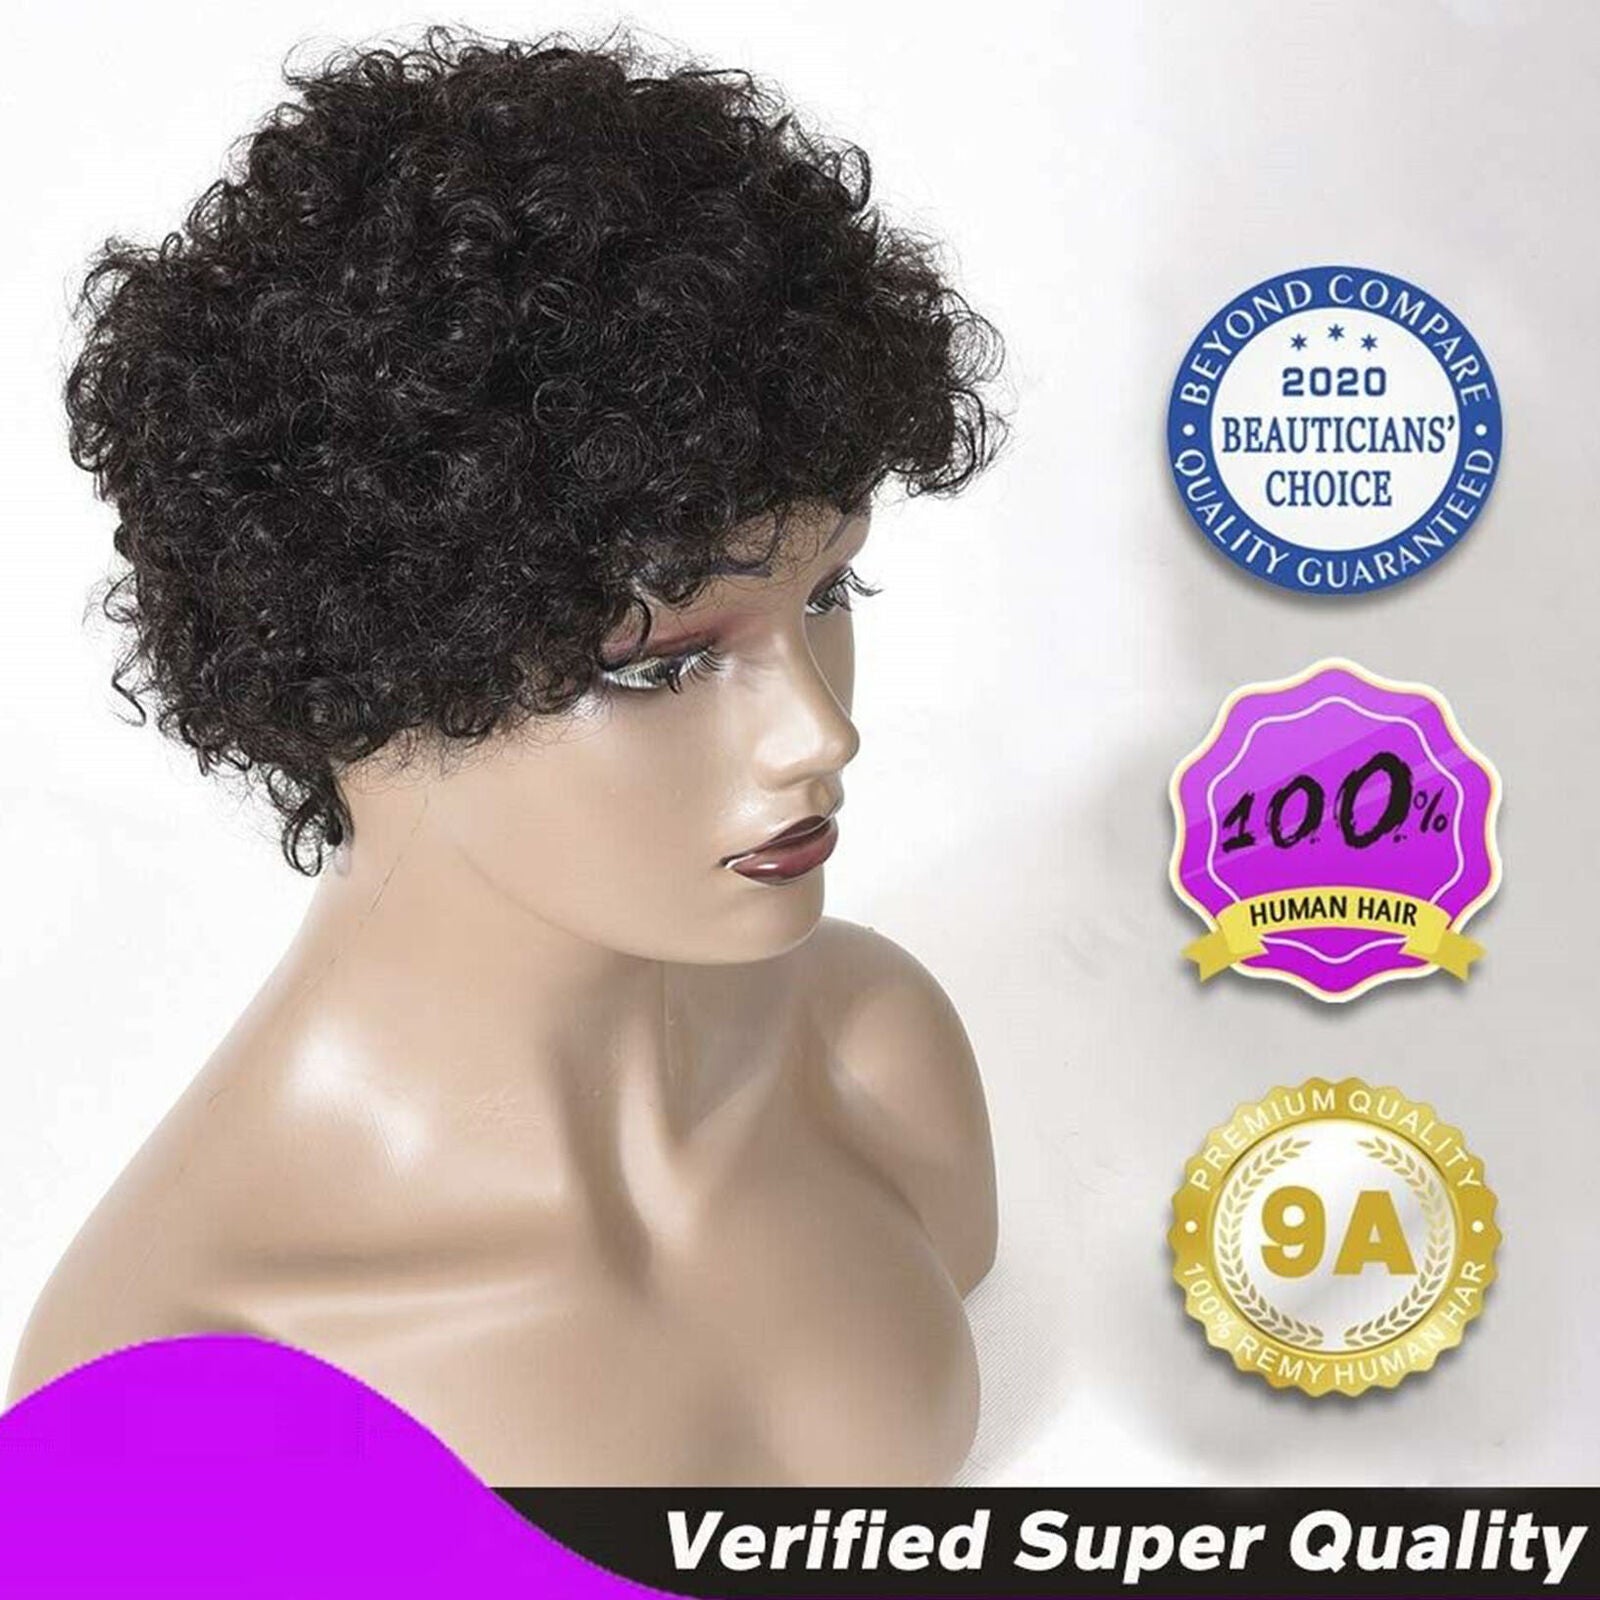 Women's Short Curly Wig w/Bangs Pixie Cut 150% Density Black Synthetic Hair